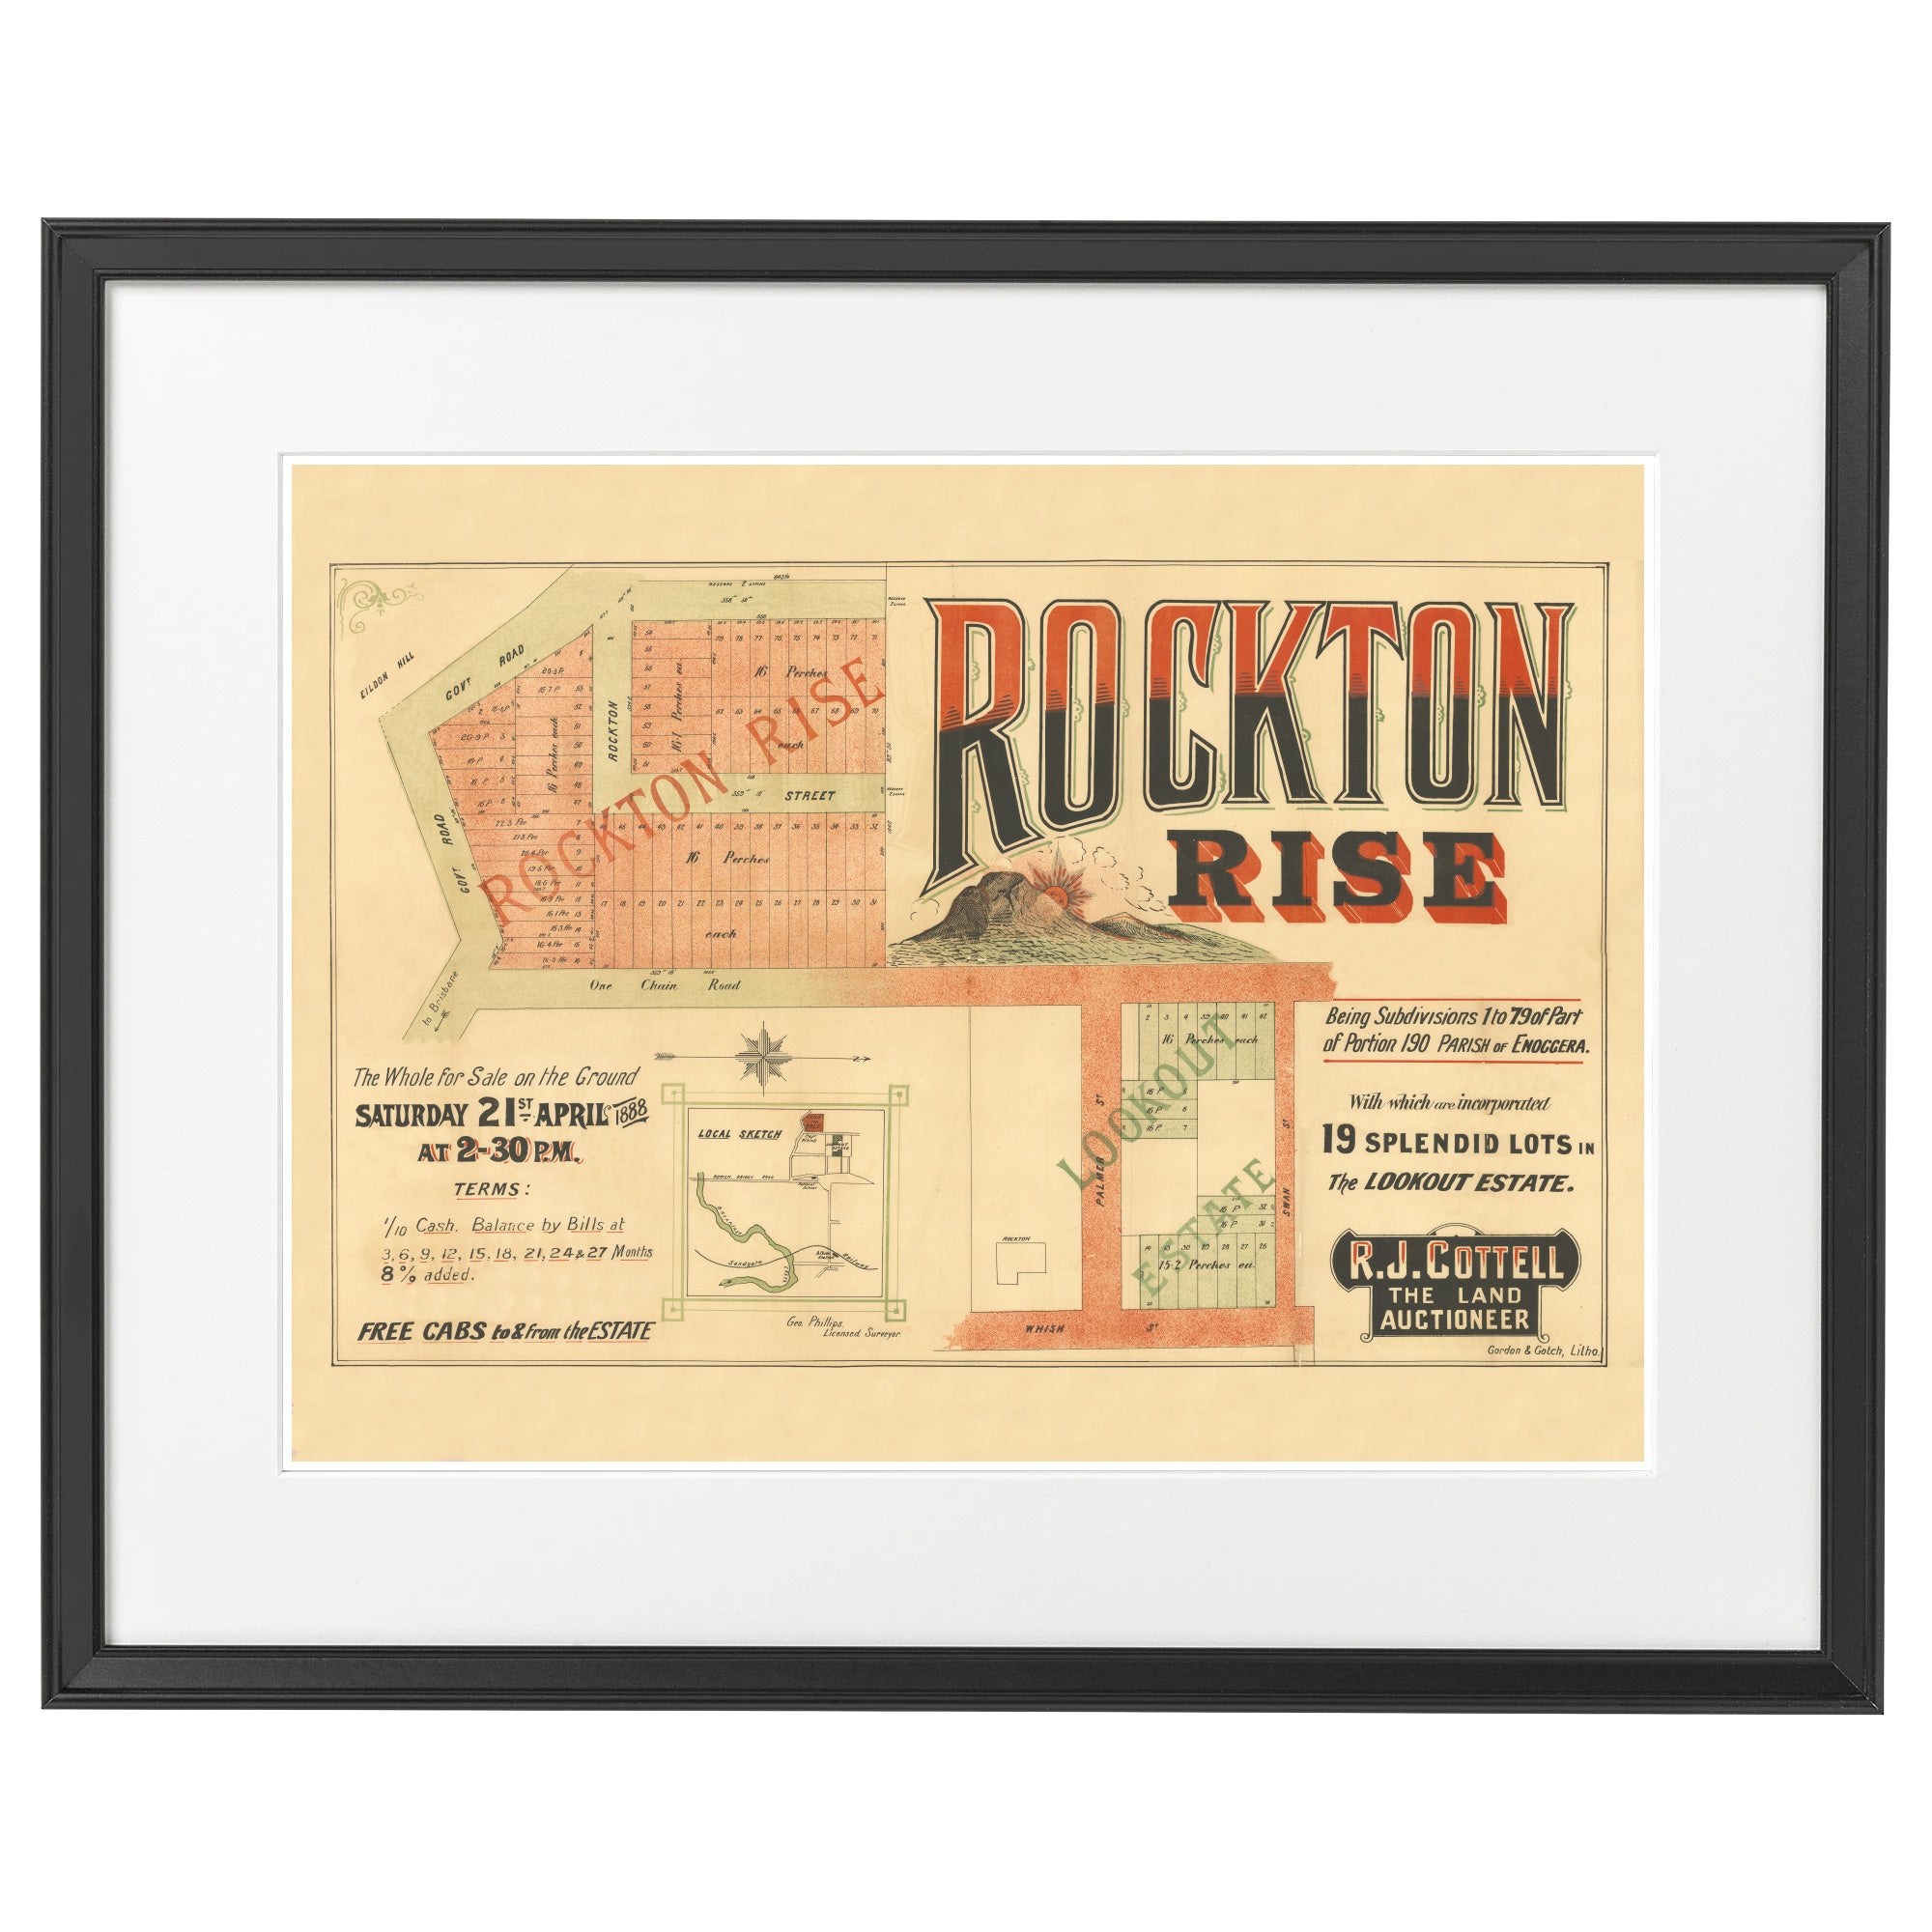 1888 Rockton Rise Estate - 135 years ago today